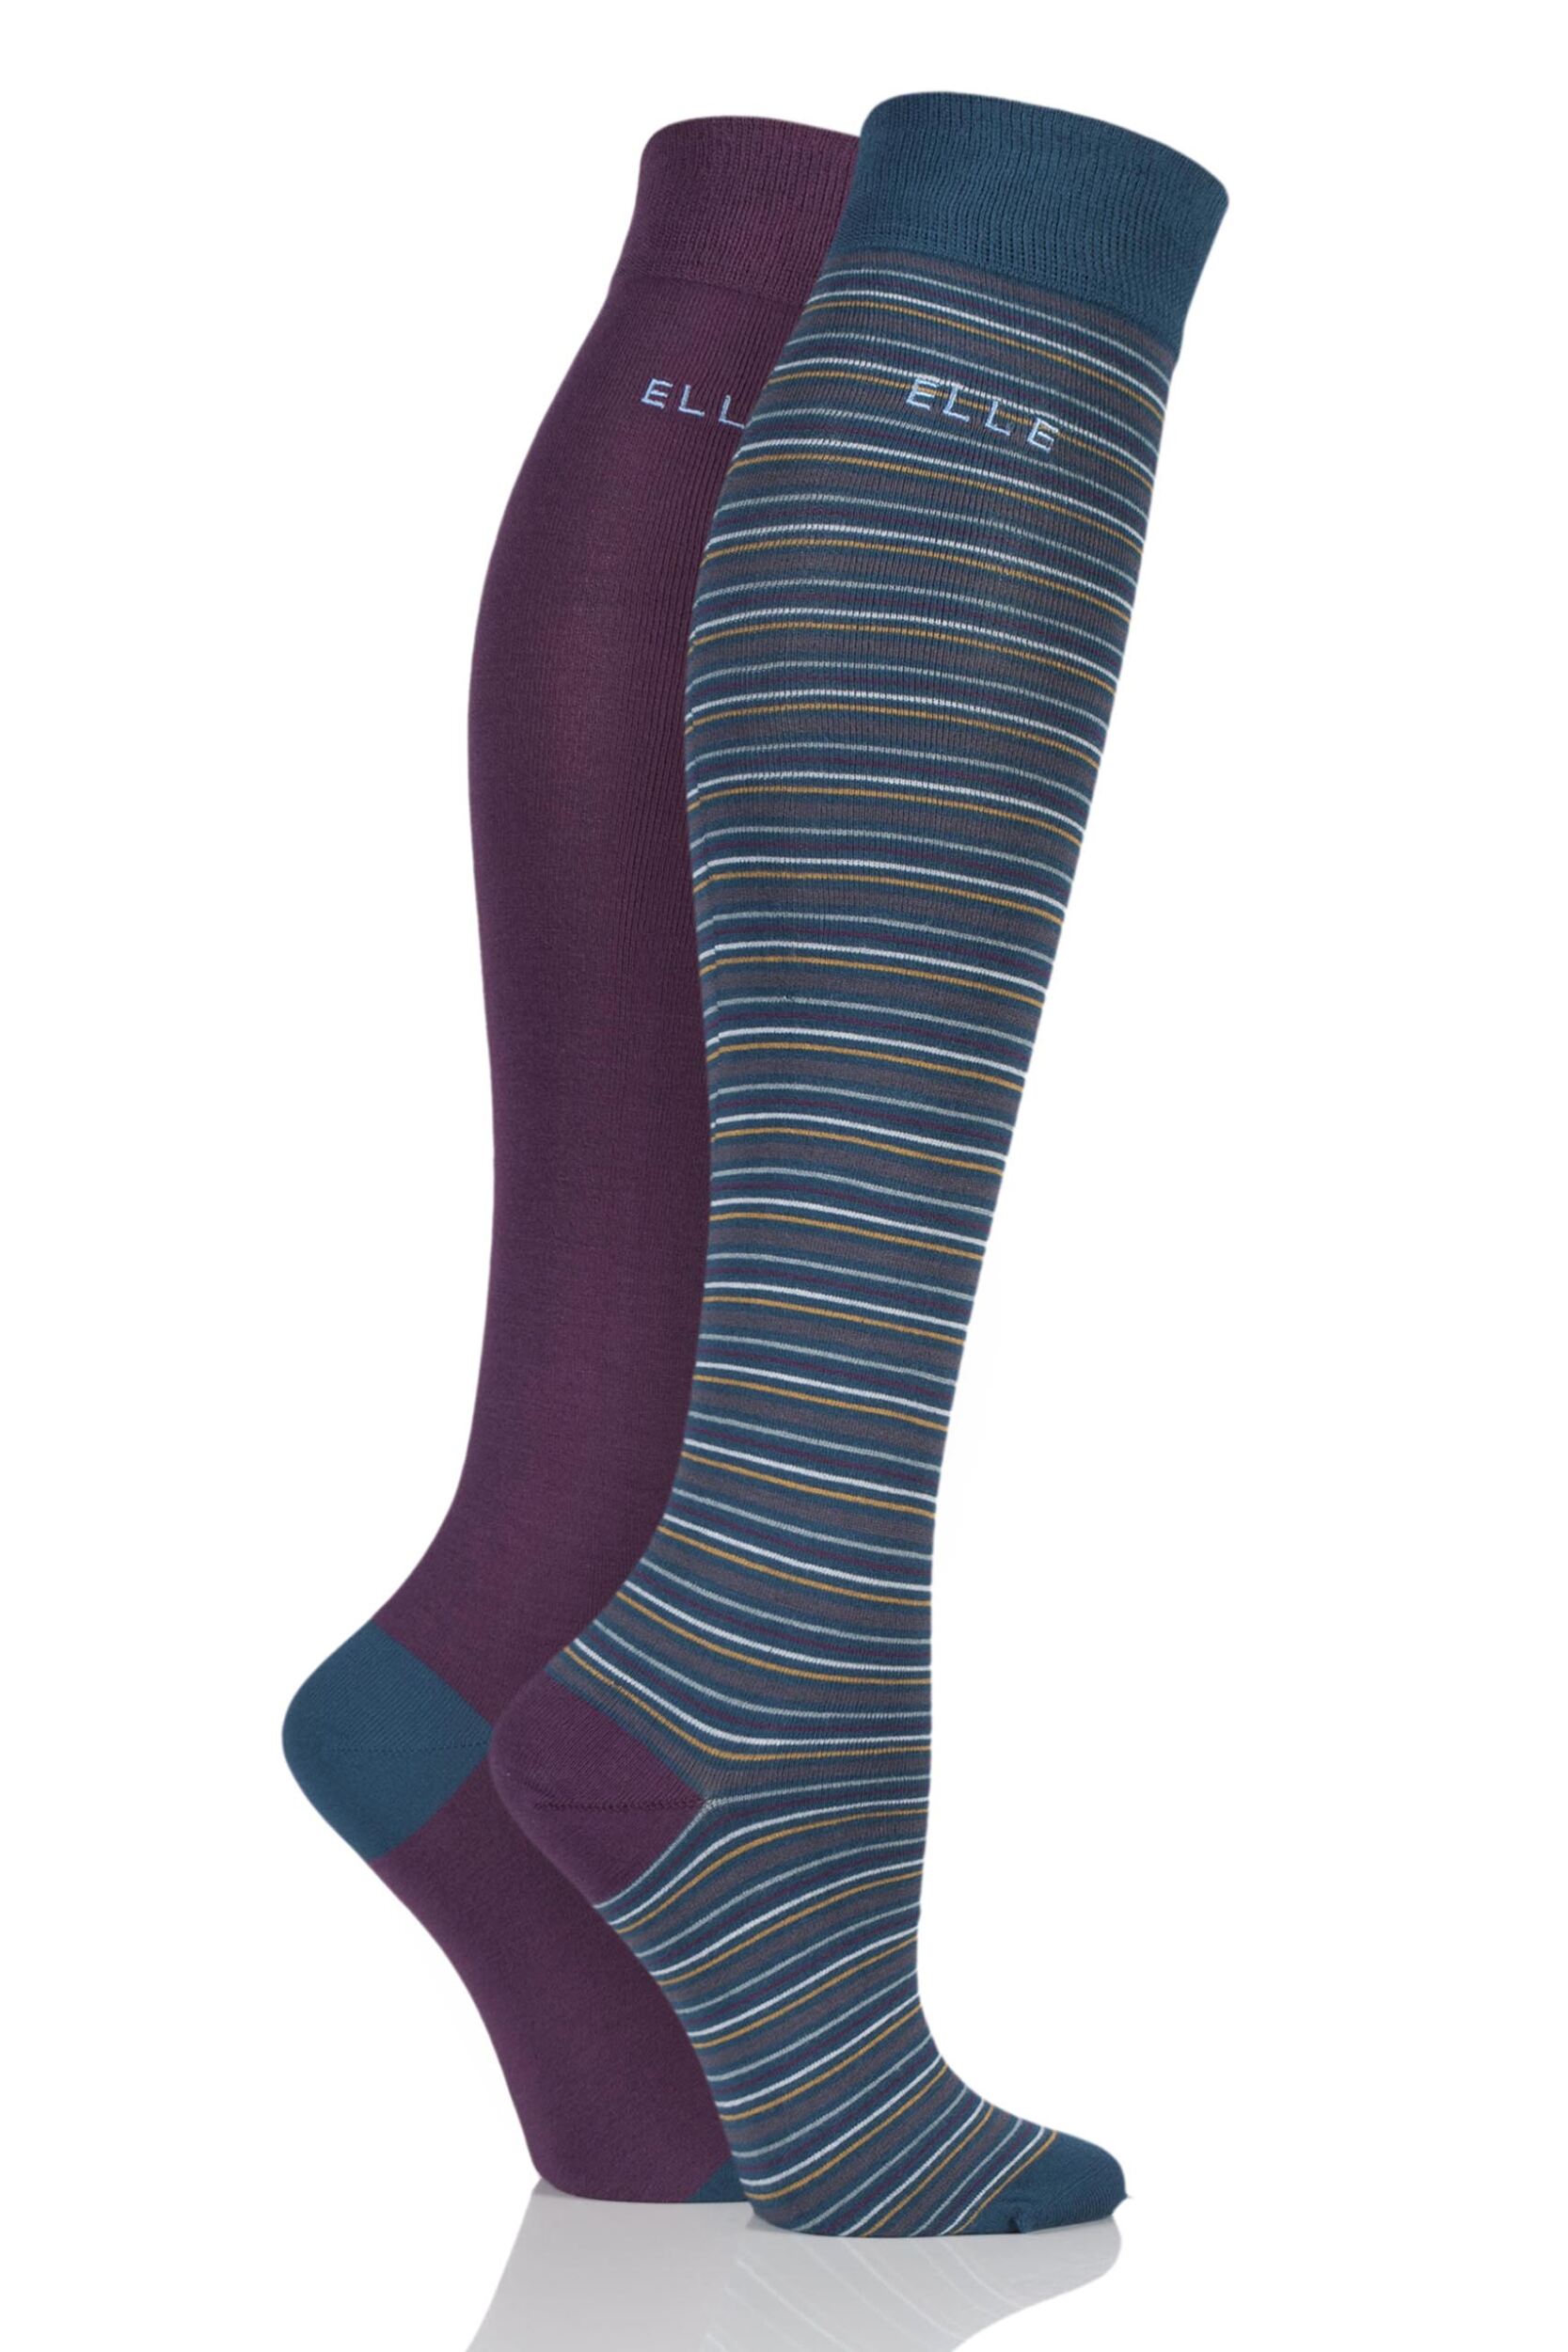 Ladies 2 Pair Elle Bamboo Striped and Plain Knee High Socks | eBay